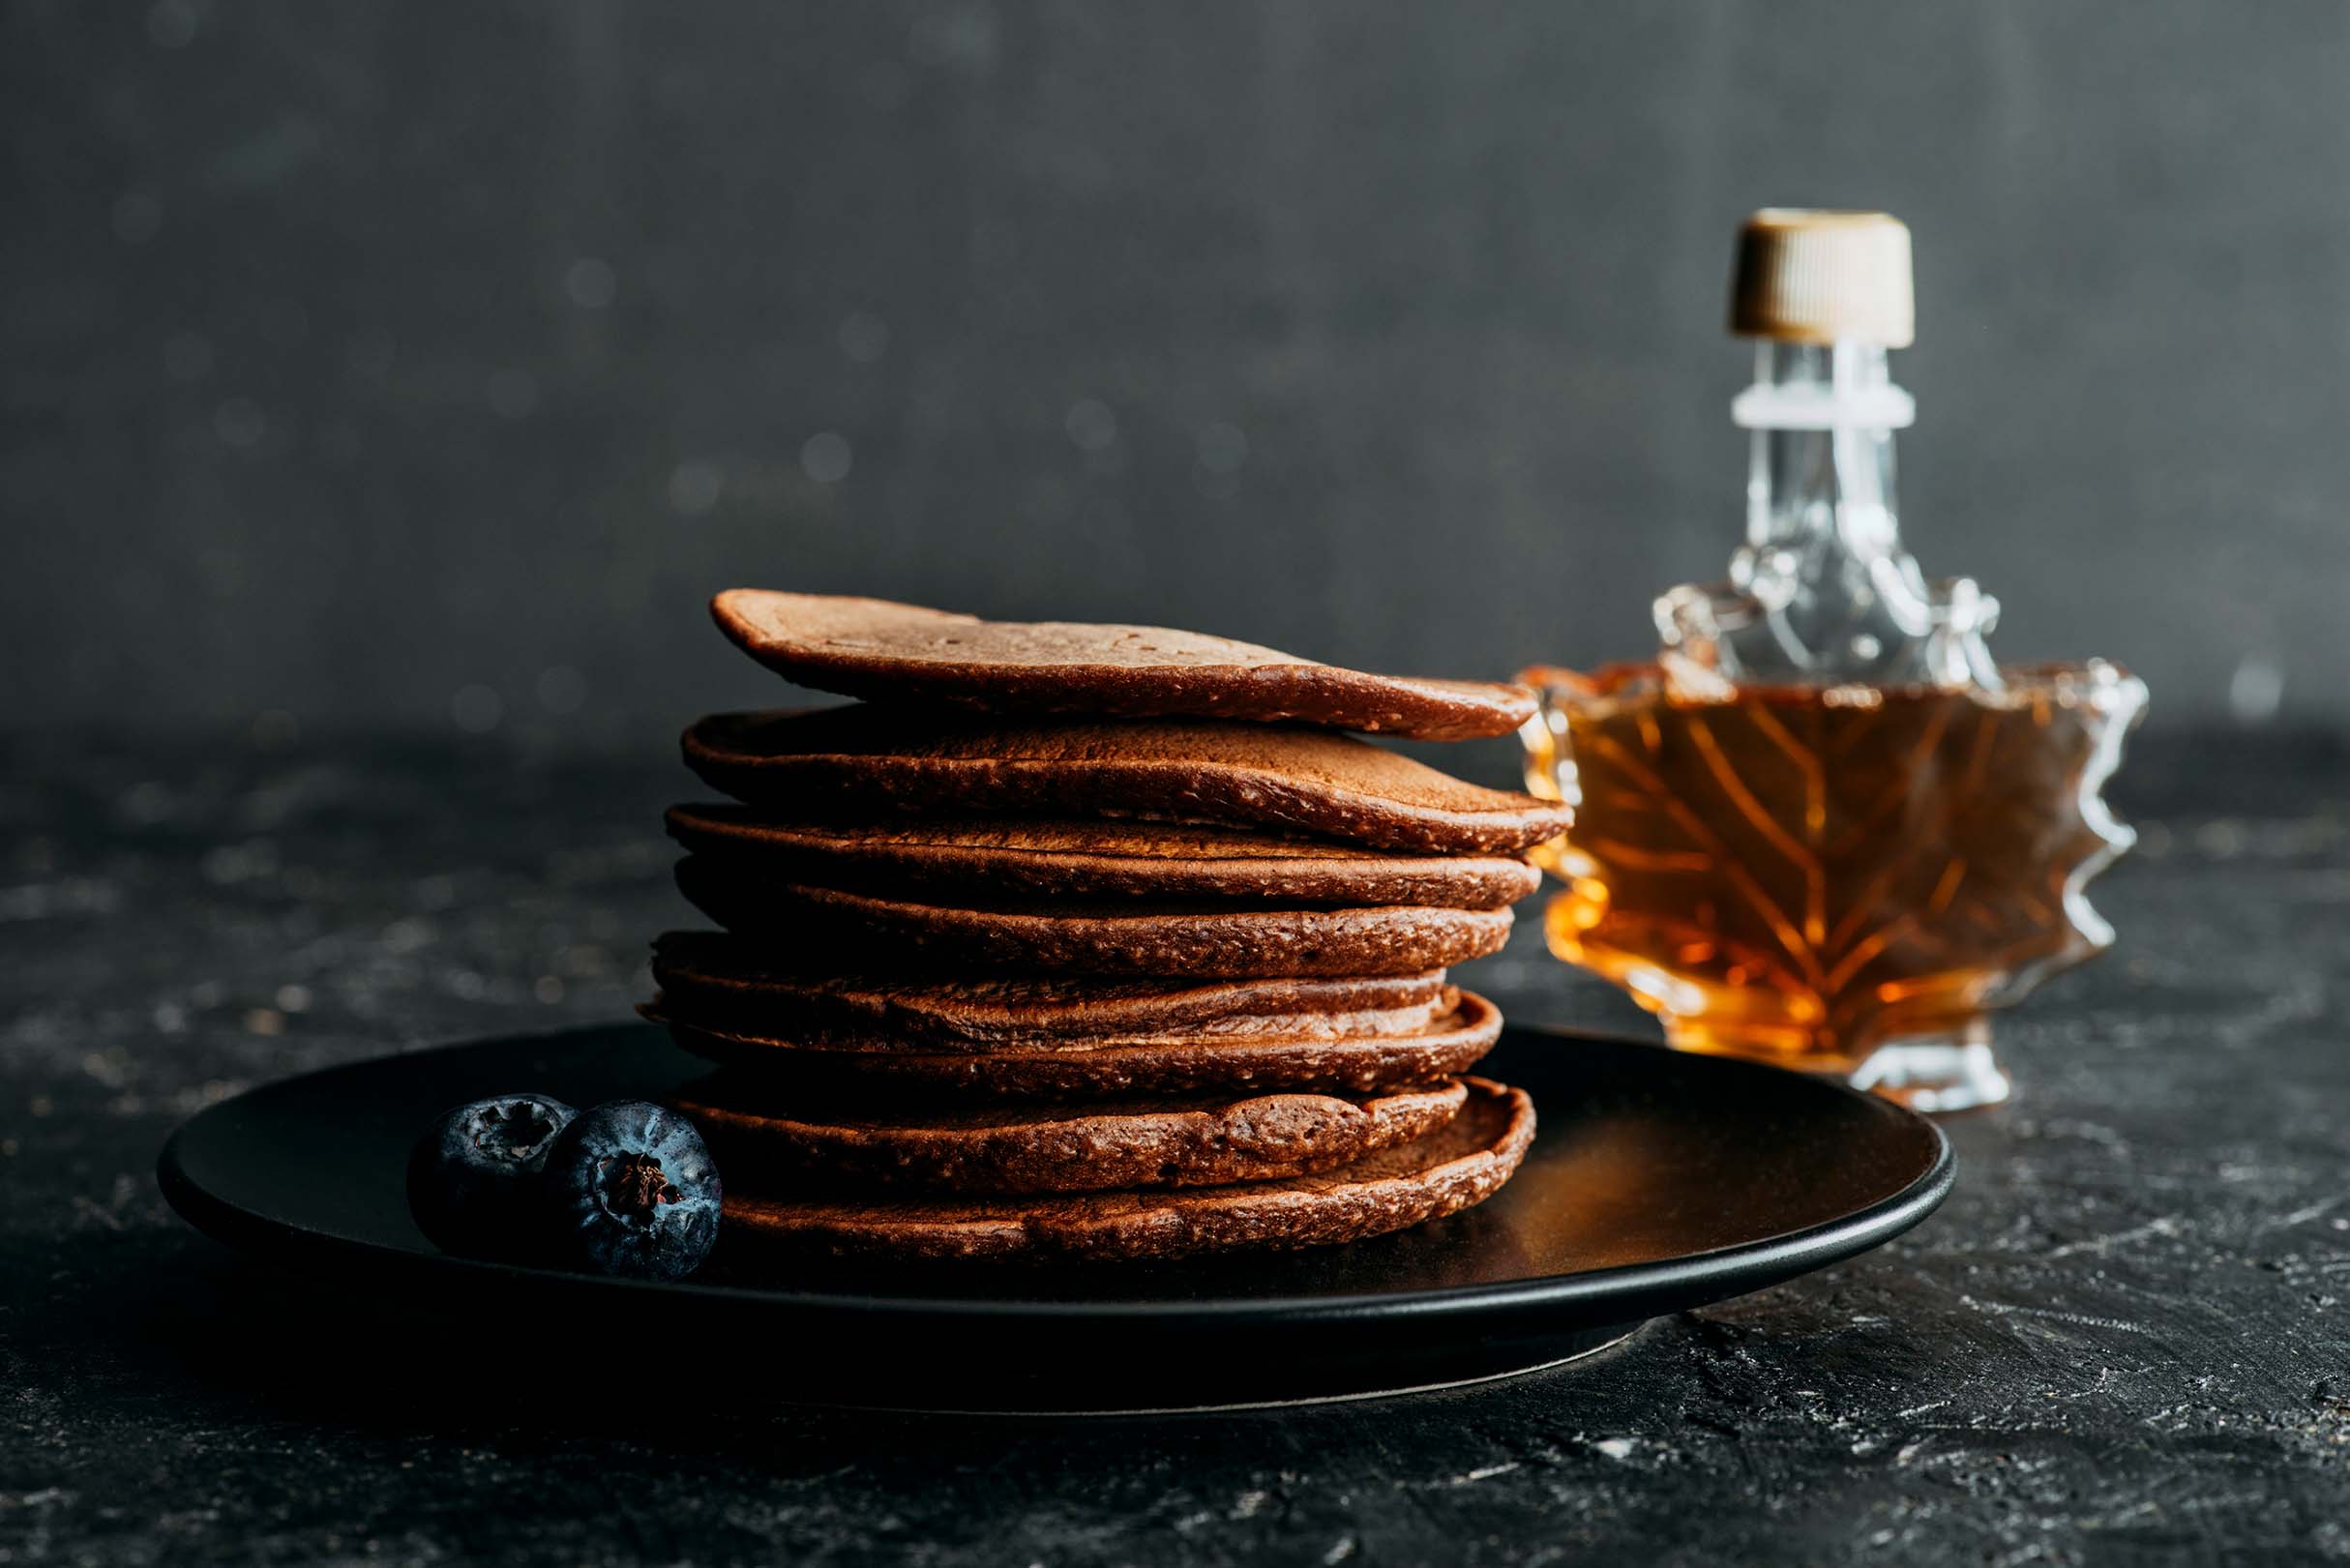 Pancakes au chocolat et sirop d'érable - Chocolate Pancakes with Maple Syrup